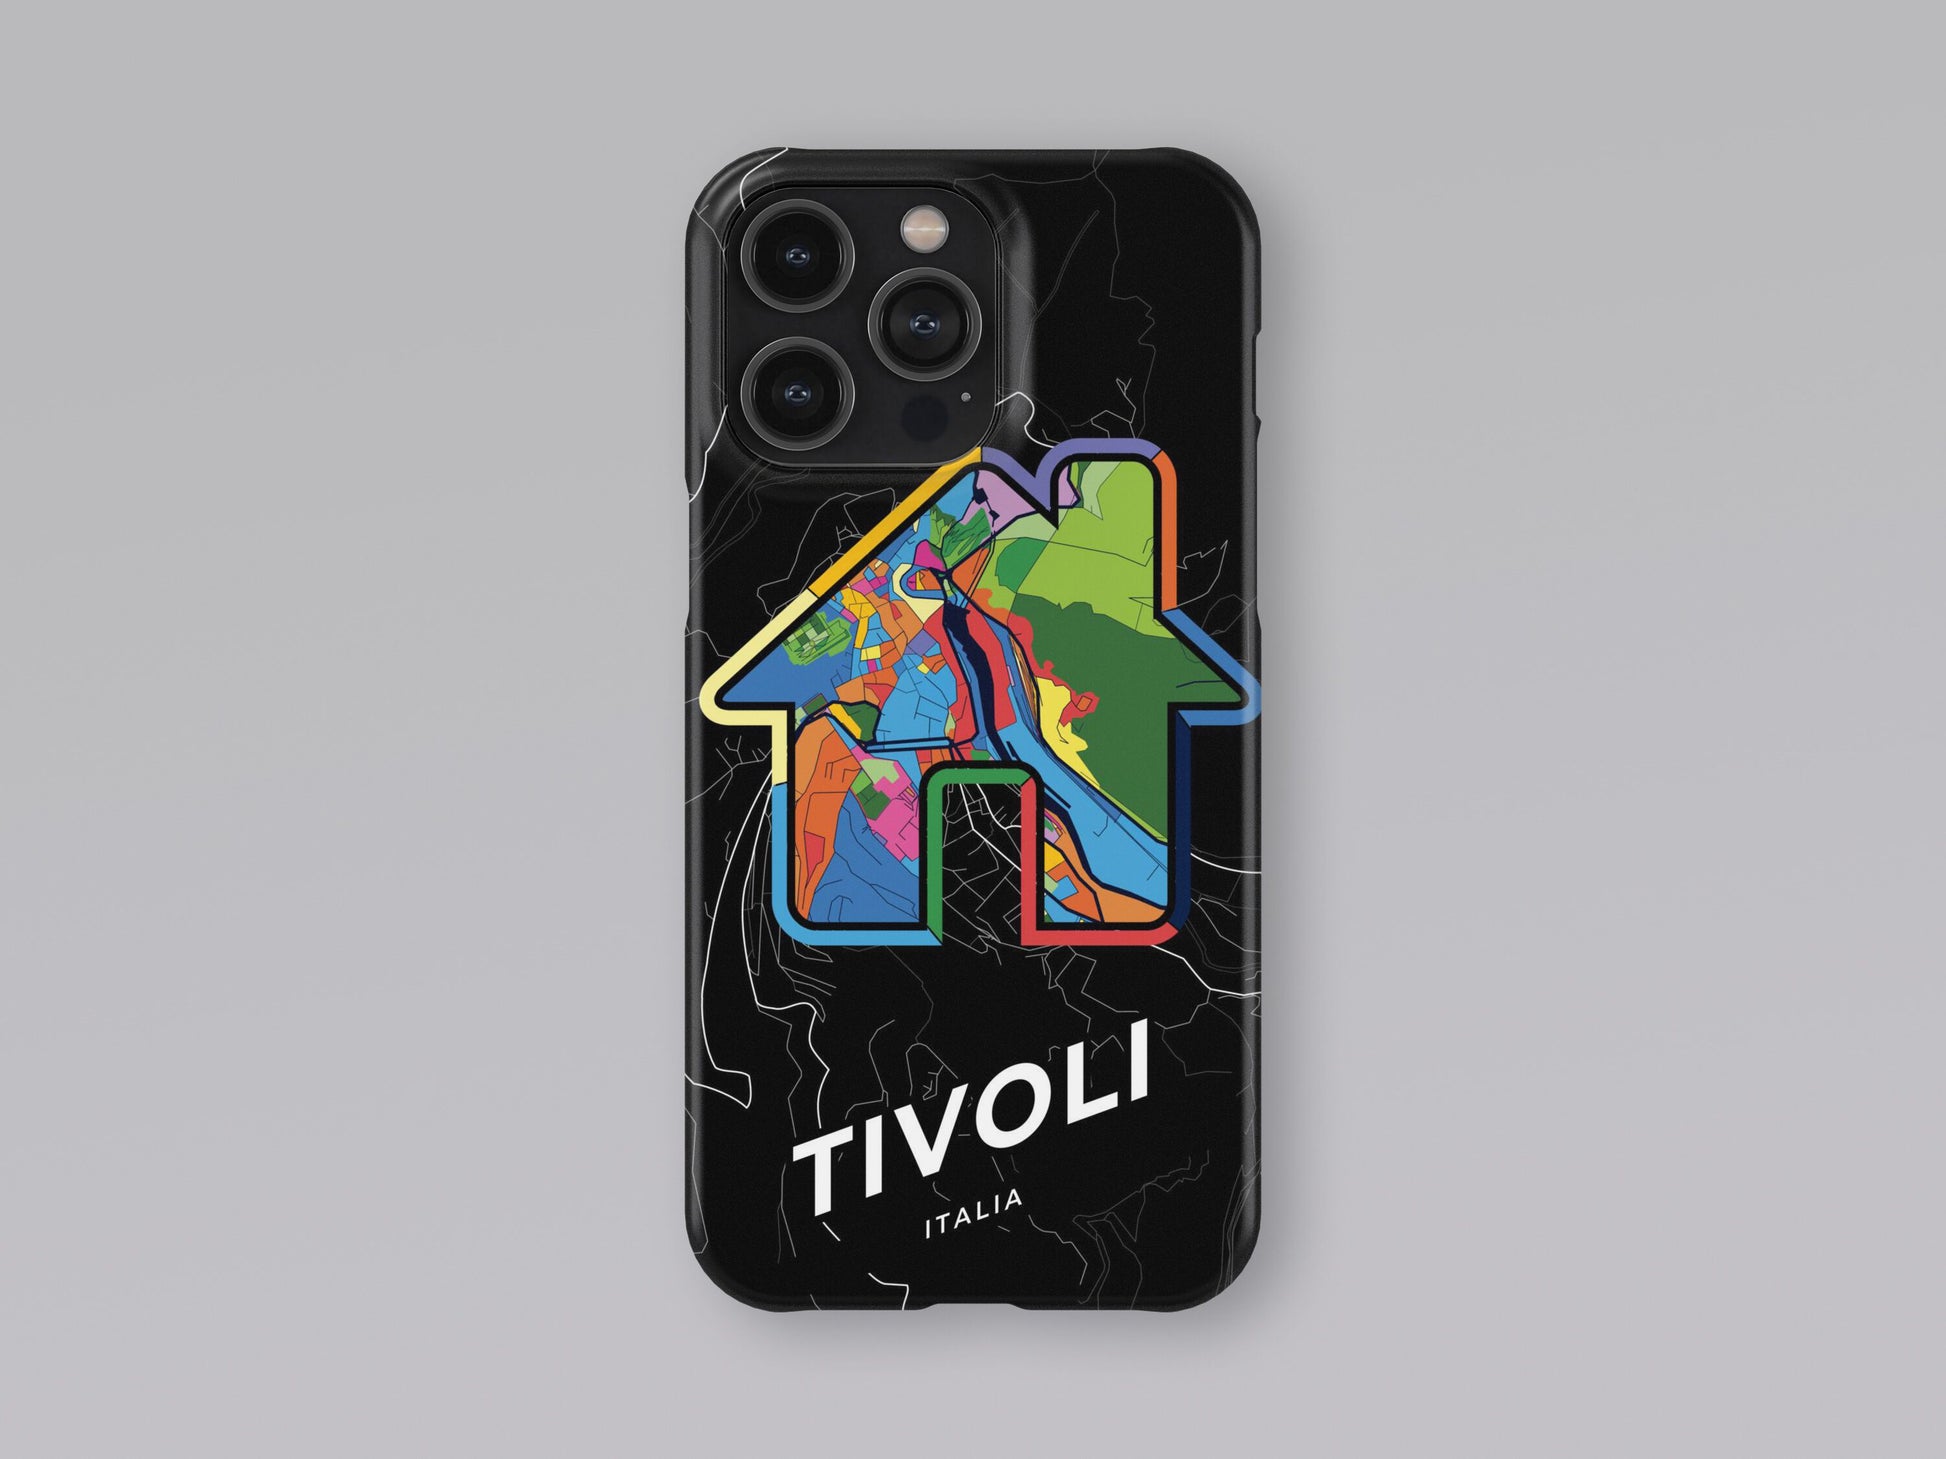 Tivoli Italy slim phone case with colorful icon 3